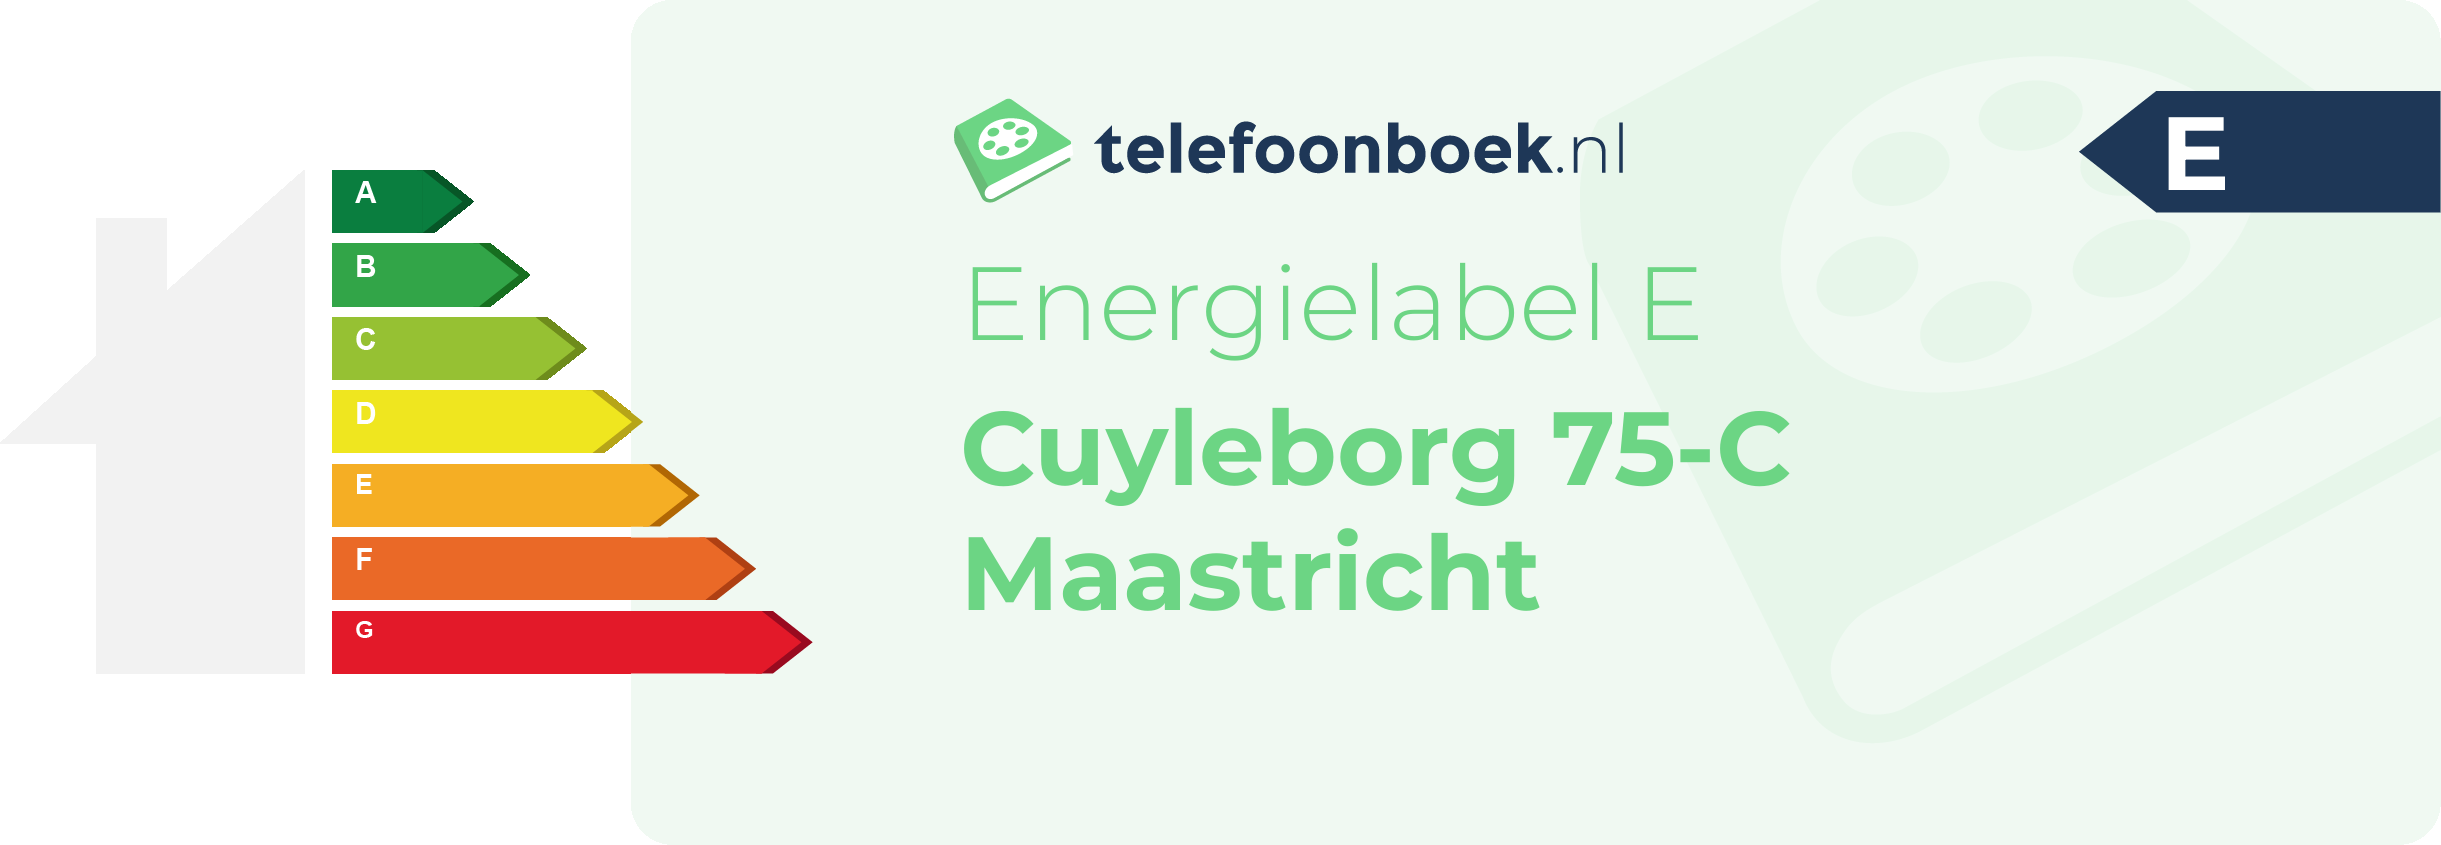 Energielabel Cuyleborg 75-C Maastricht